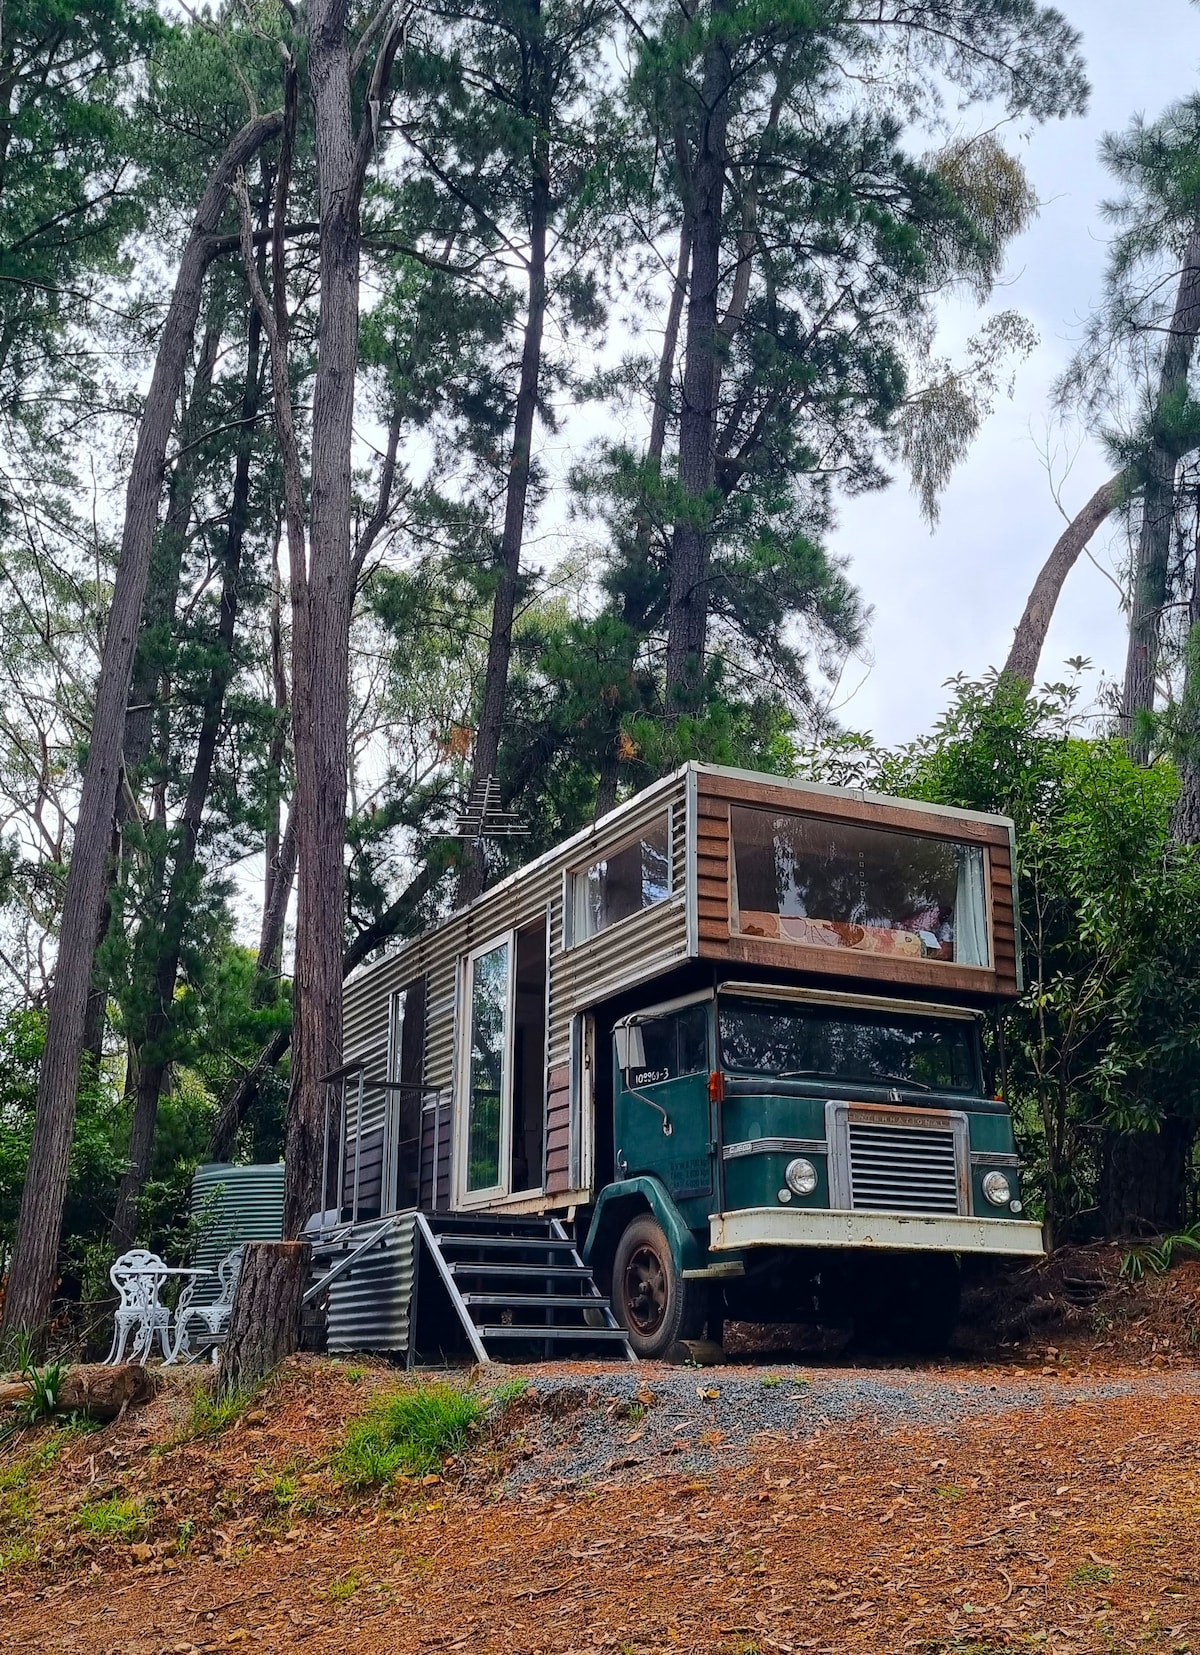 Unique getaway in a tree truck